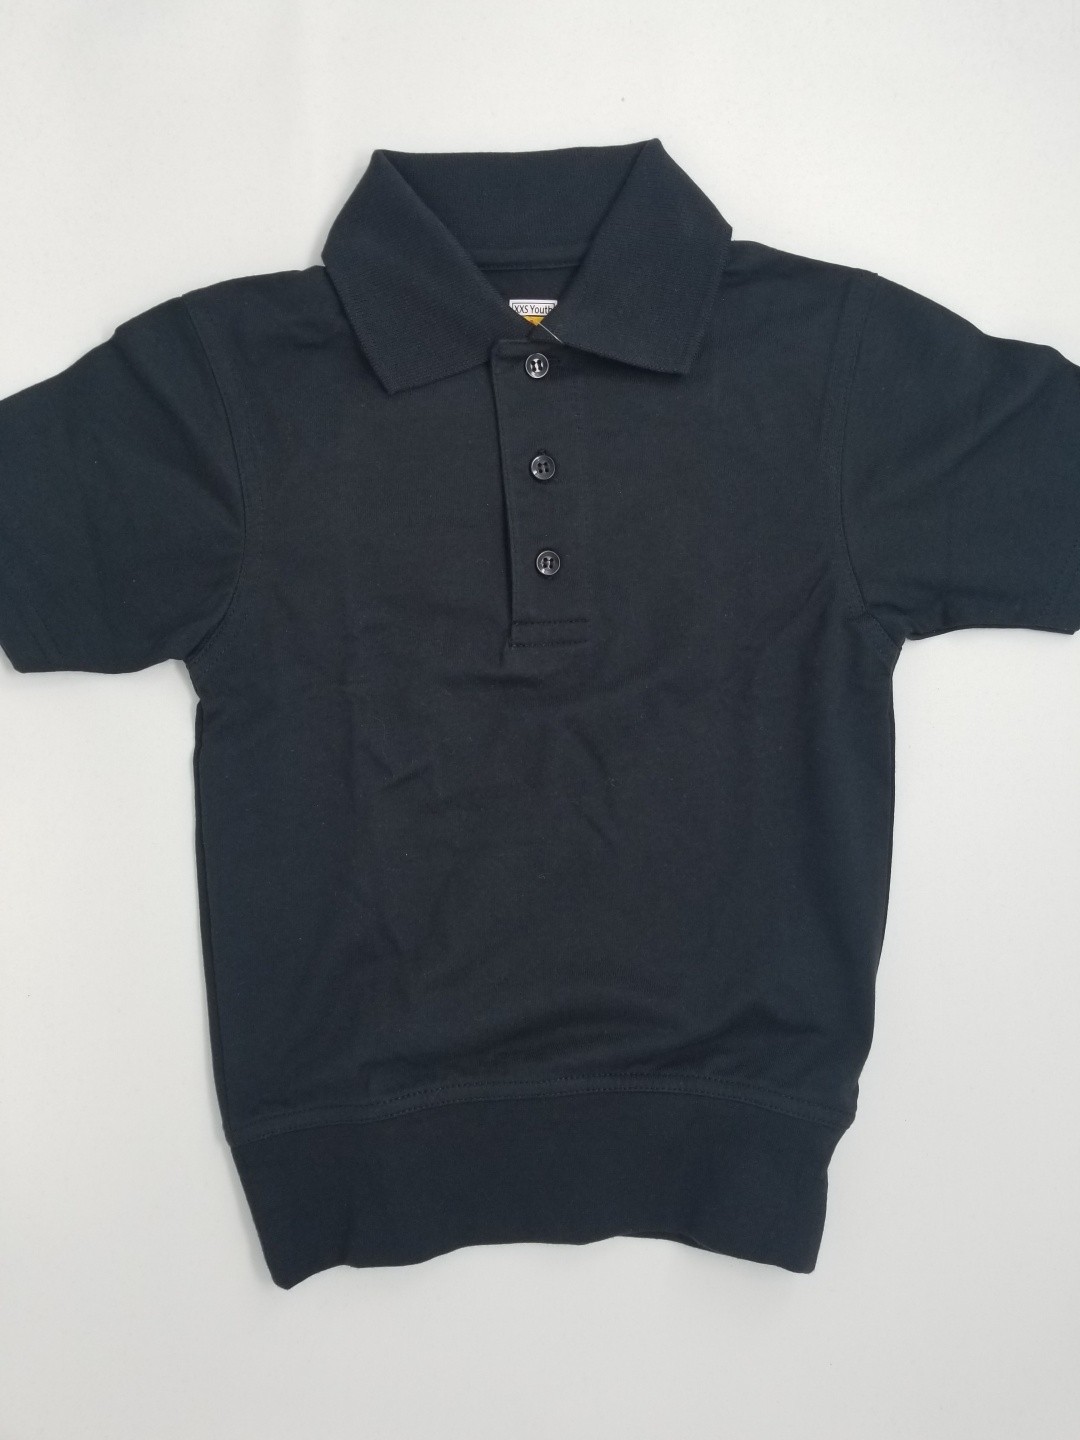 Banded Bottom "No Tuck" Knit Shirt- Smooth/Jersey- Short Sleeve-Black